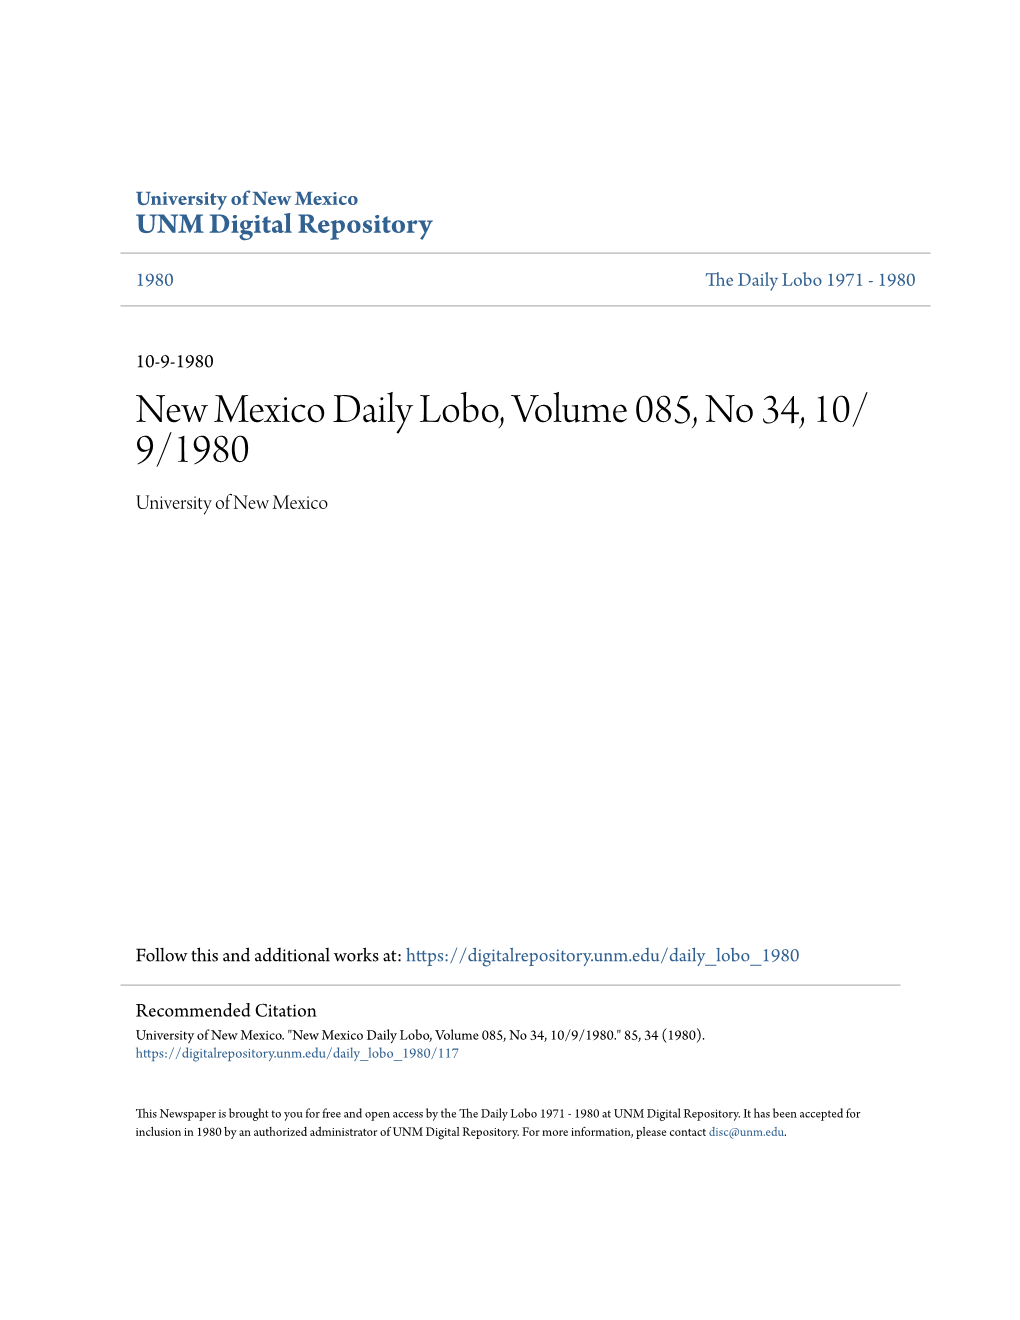 New Mexico Daily Lobo, Volume 085, No 34, 10/9/1980." 85, 34 (1980)